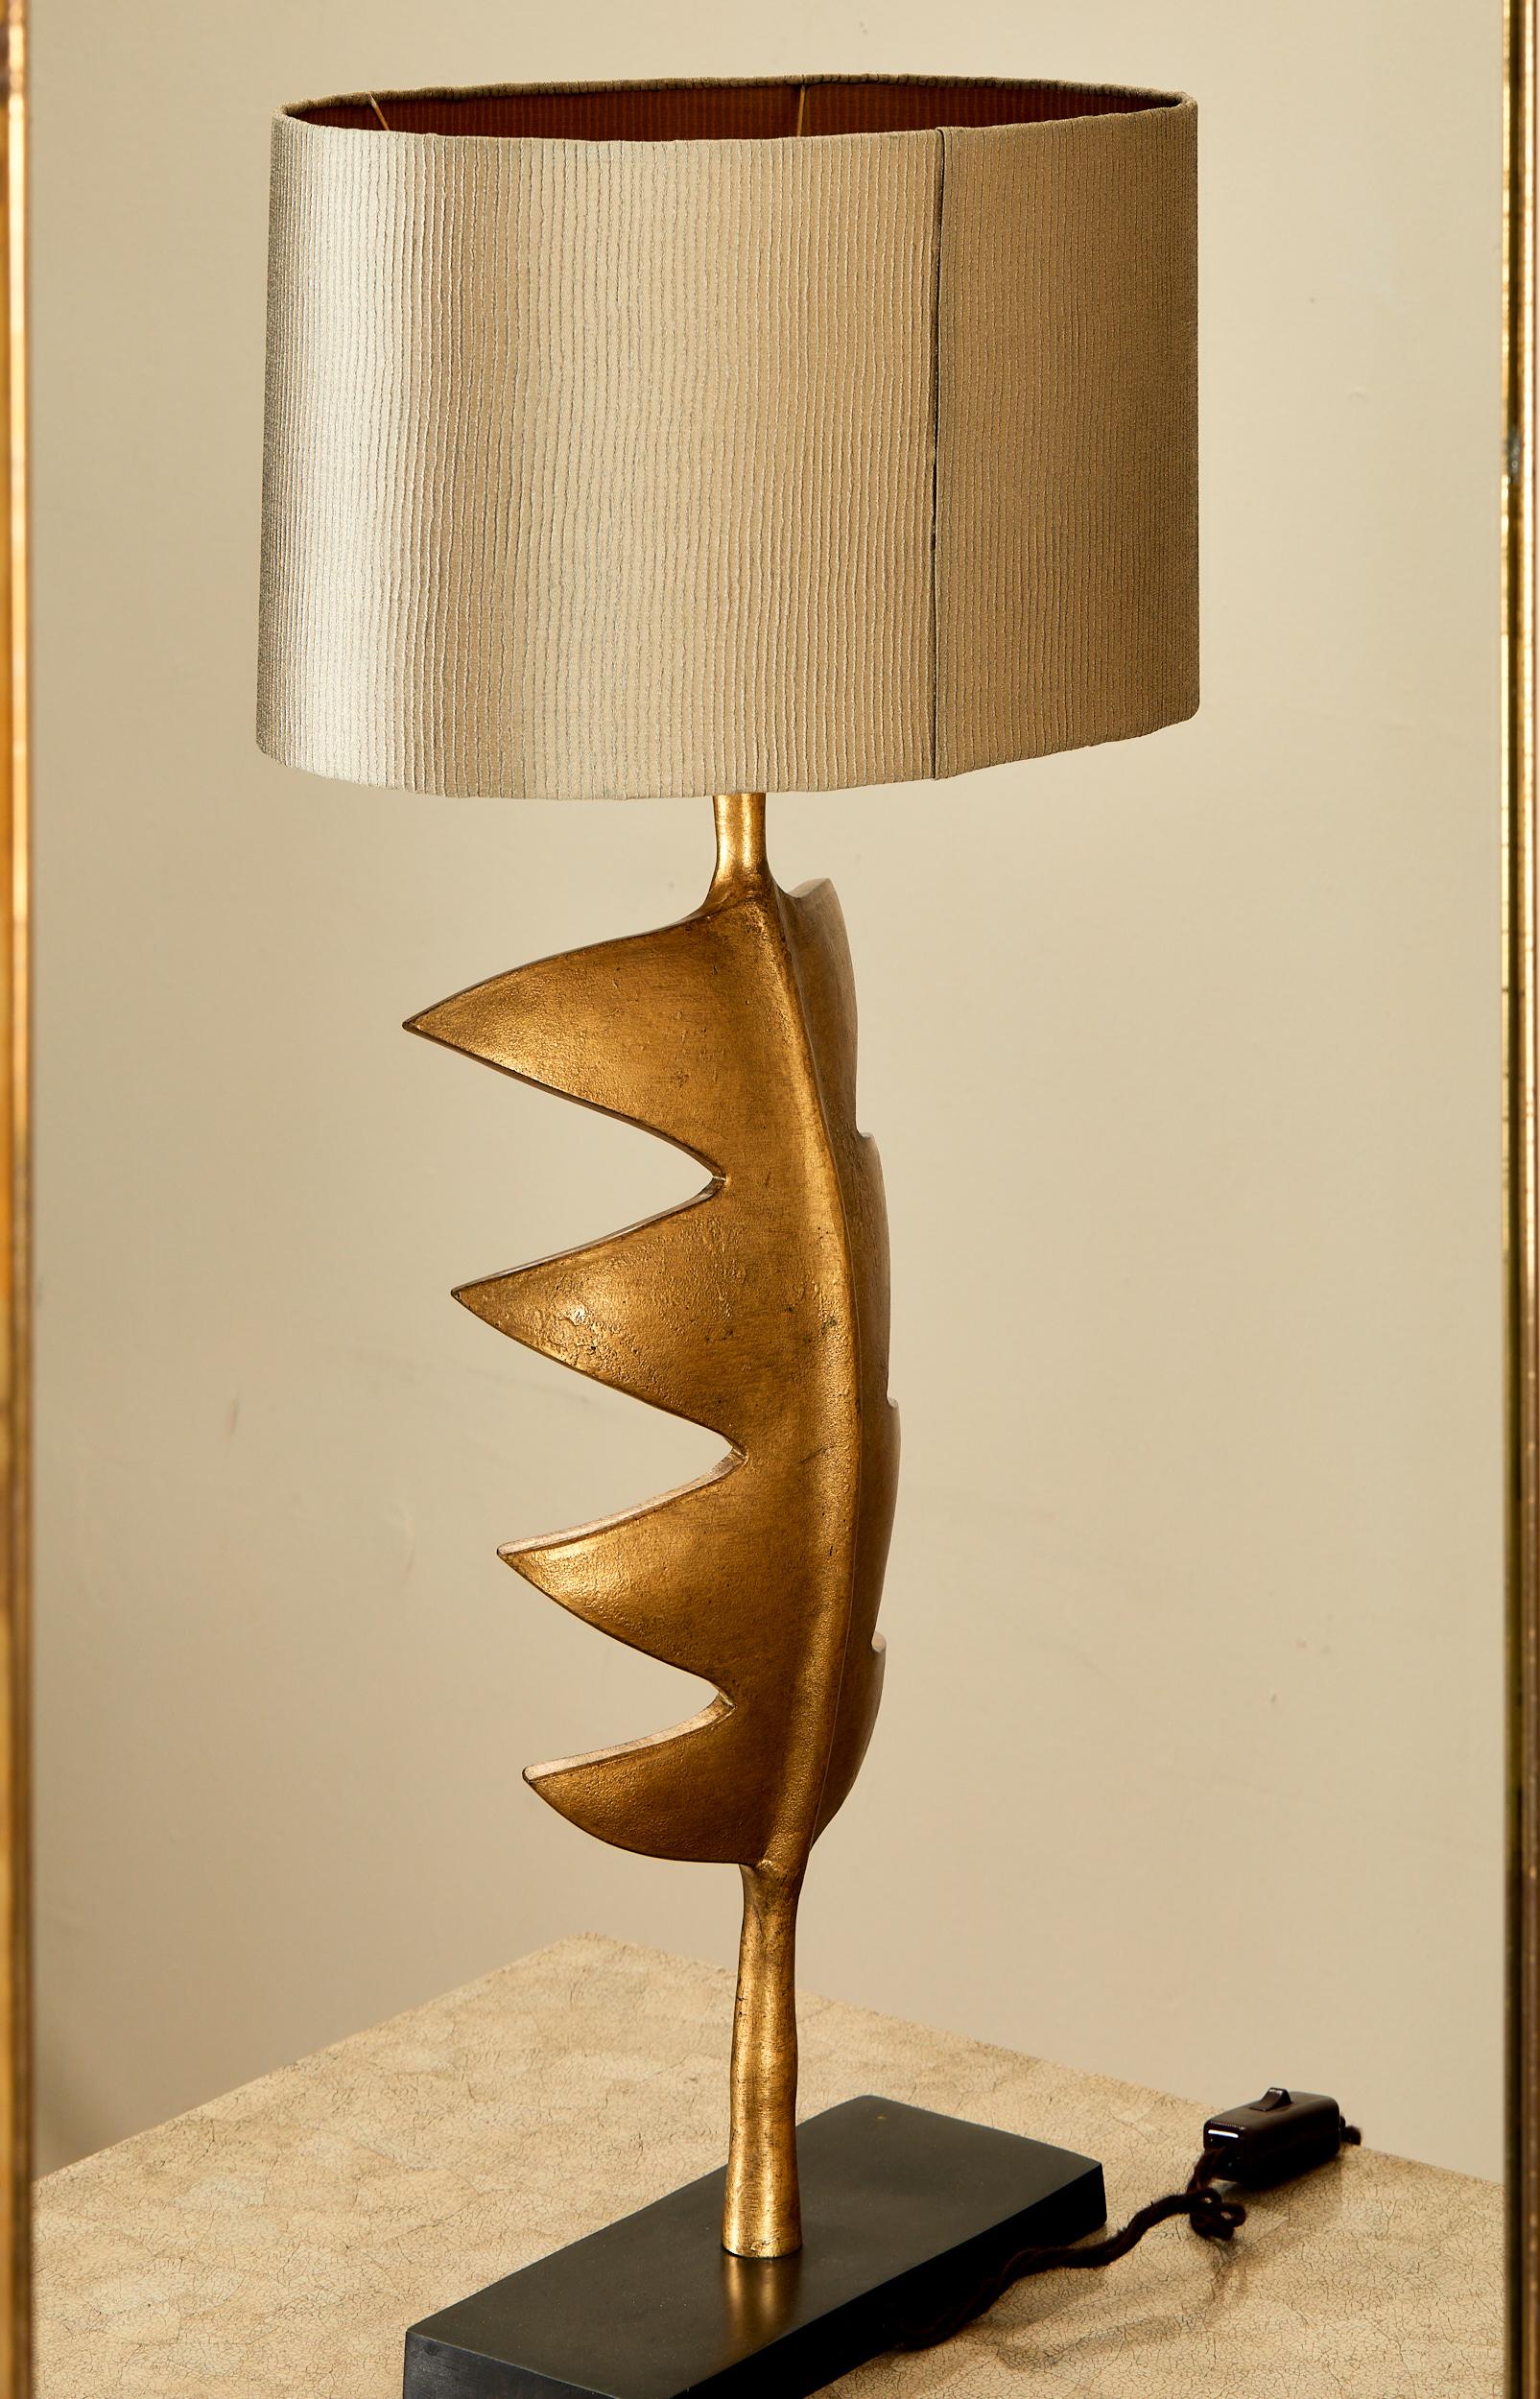 Italian Porto Romana, lampe de table en résine à l'imitation du bronze, circa 2000.